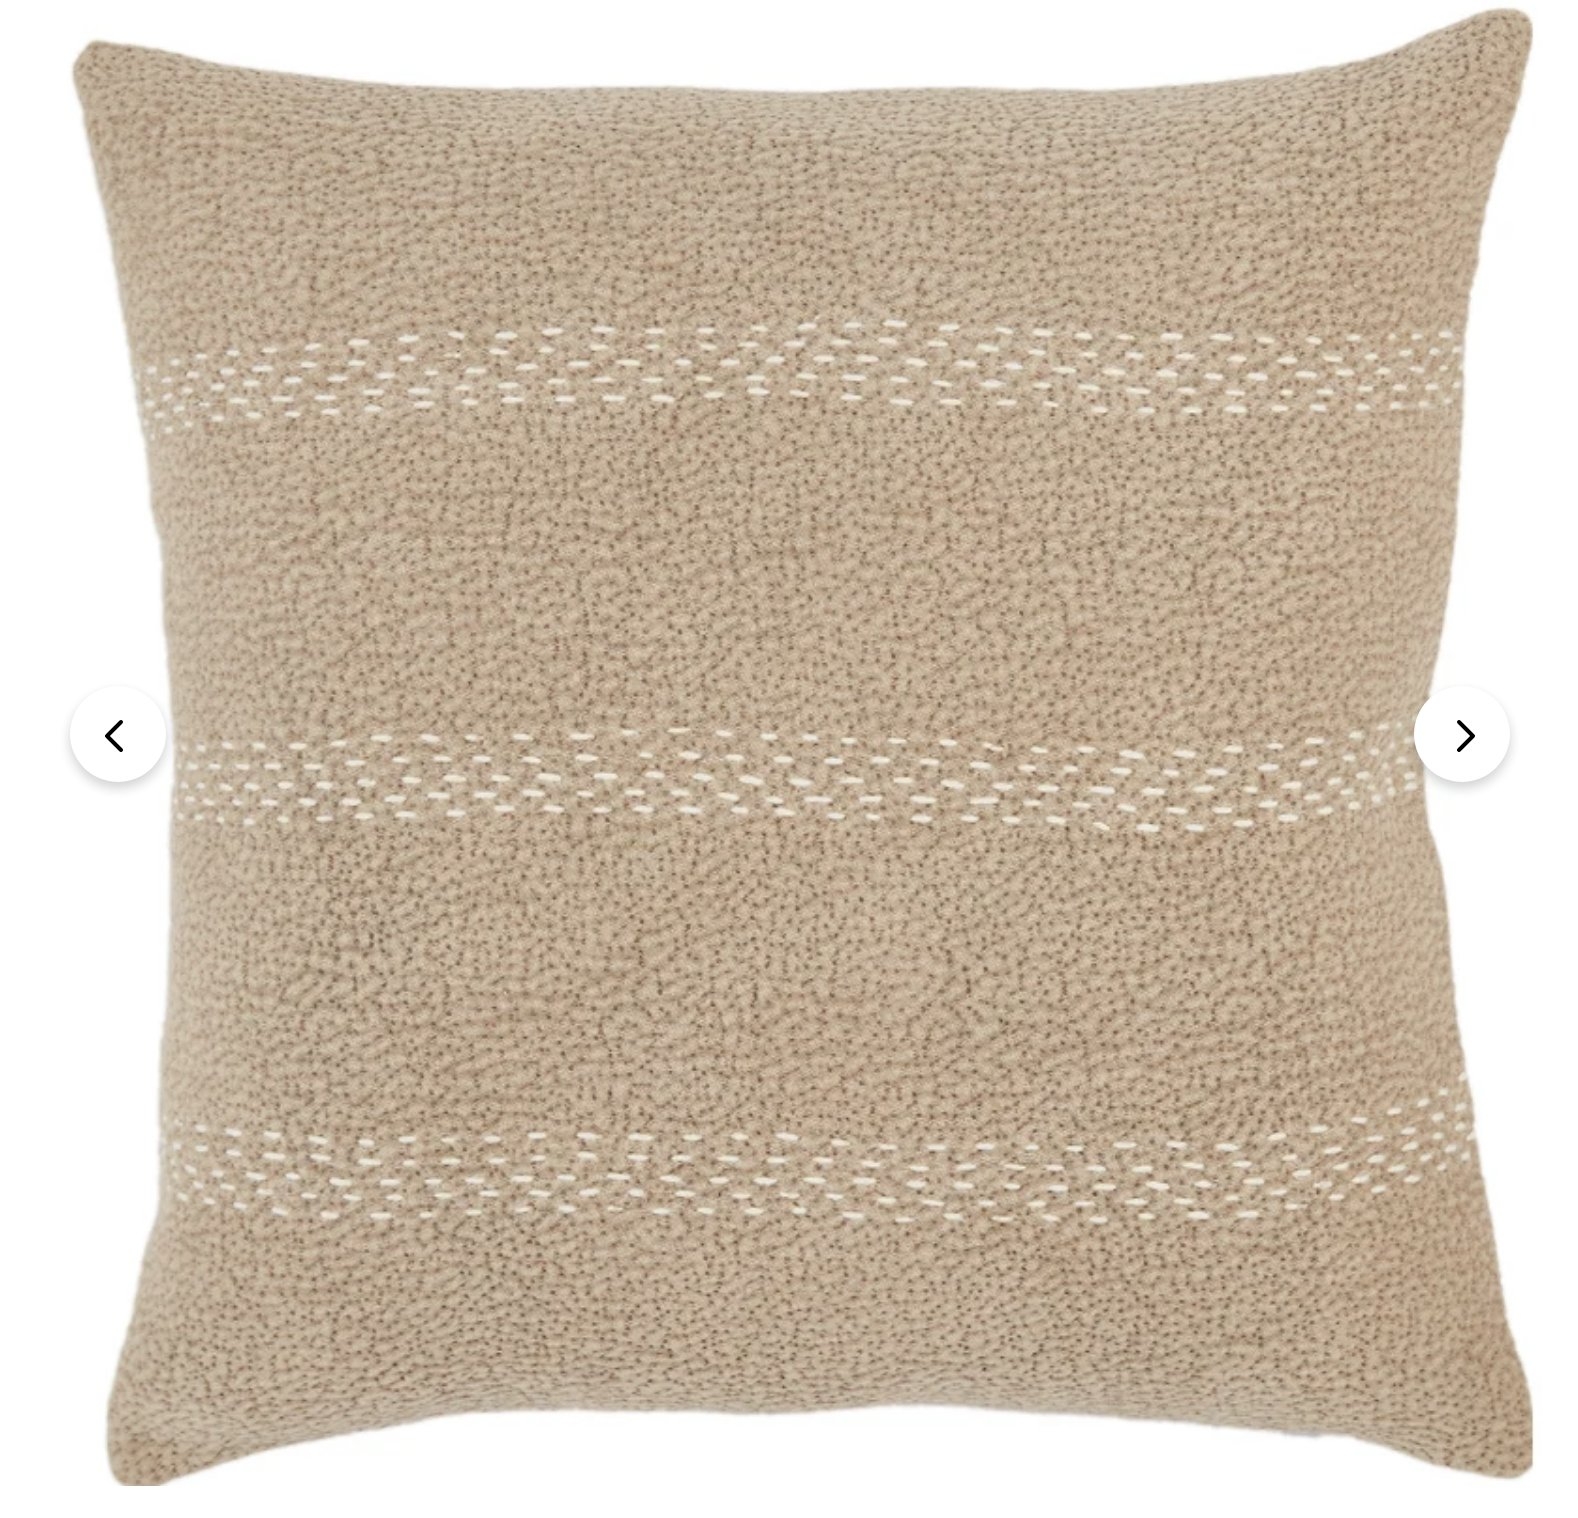 Dorrell Square Cotton Pillow Cover & Insert - Image 0